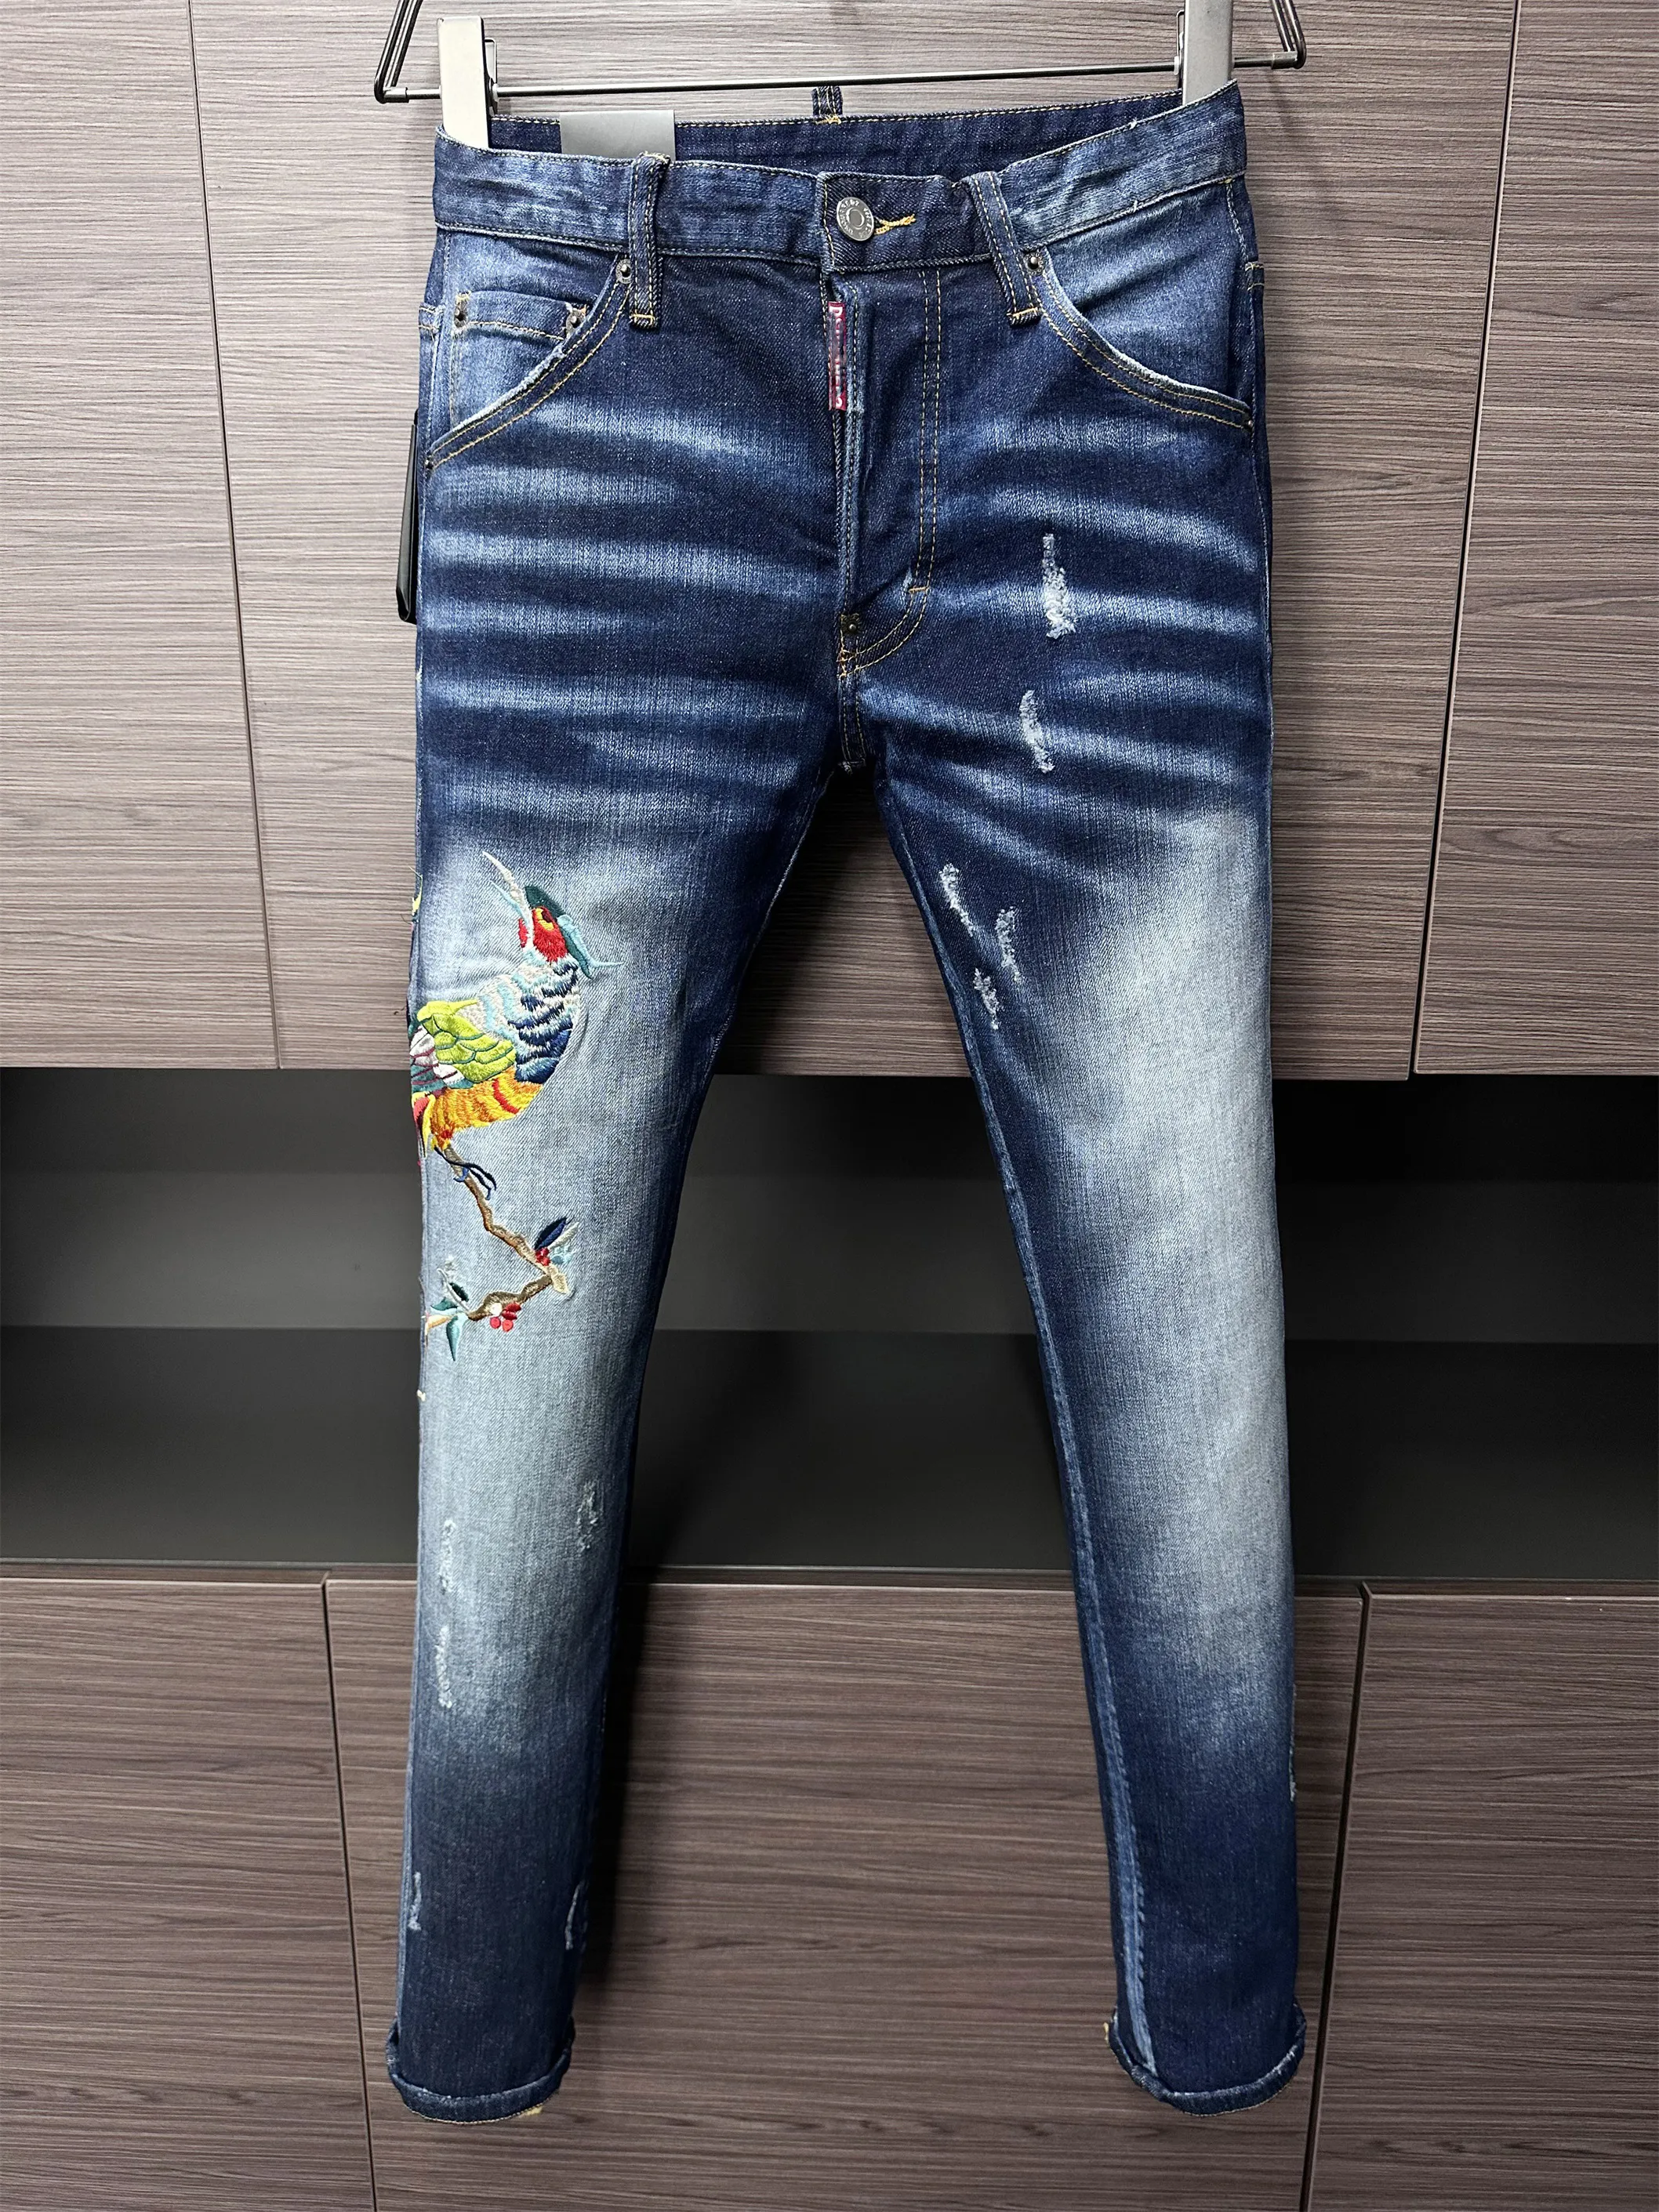 Designer Classic Men's Jeans Knight Boy Jeans Style Slim Stretch Stone Wash Process gescheurd jeans Aziatische maat 28-38